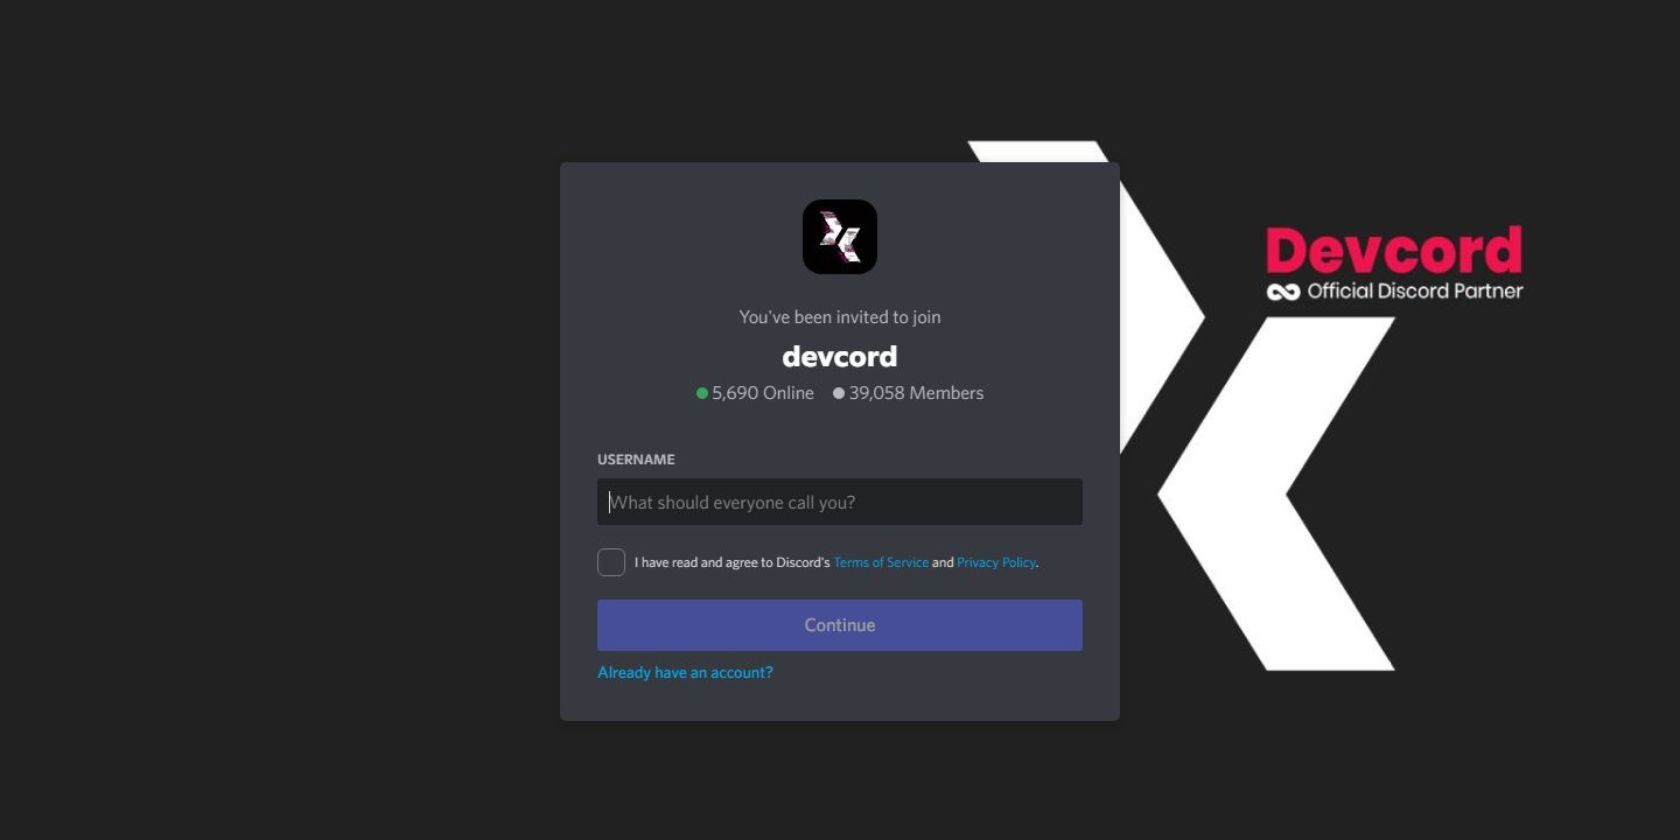  A screenshot of Devcord's invite page